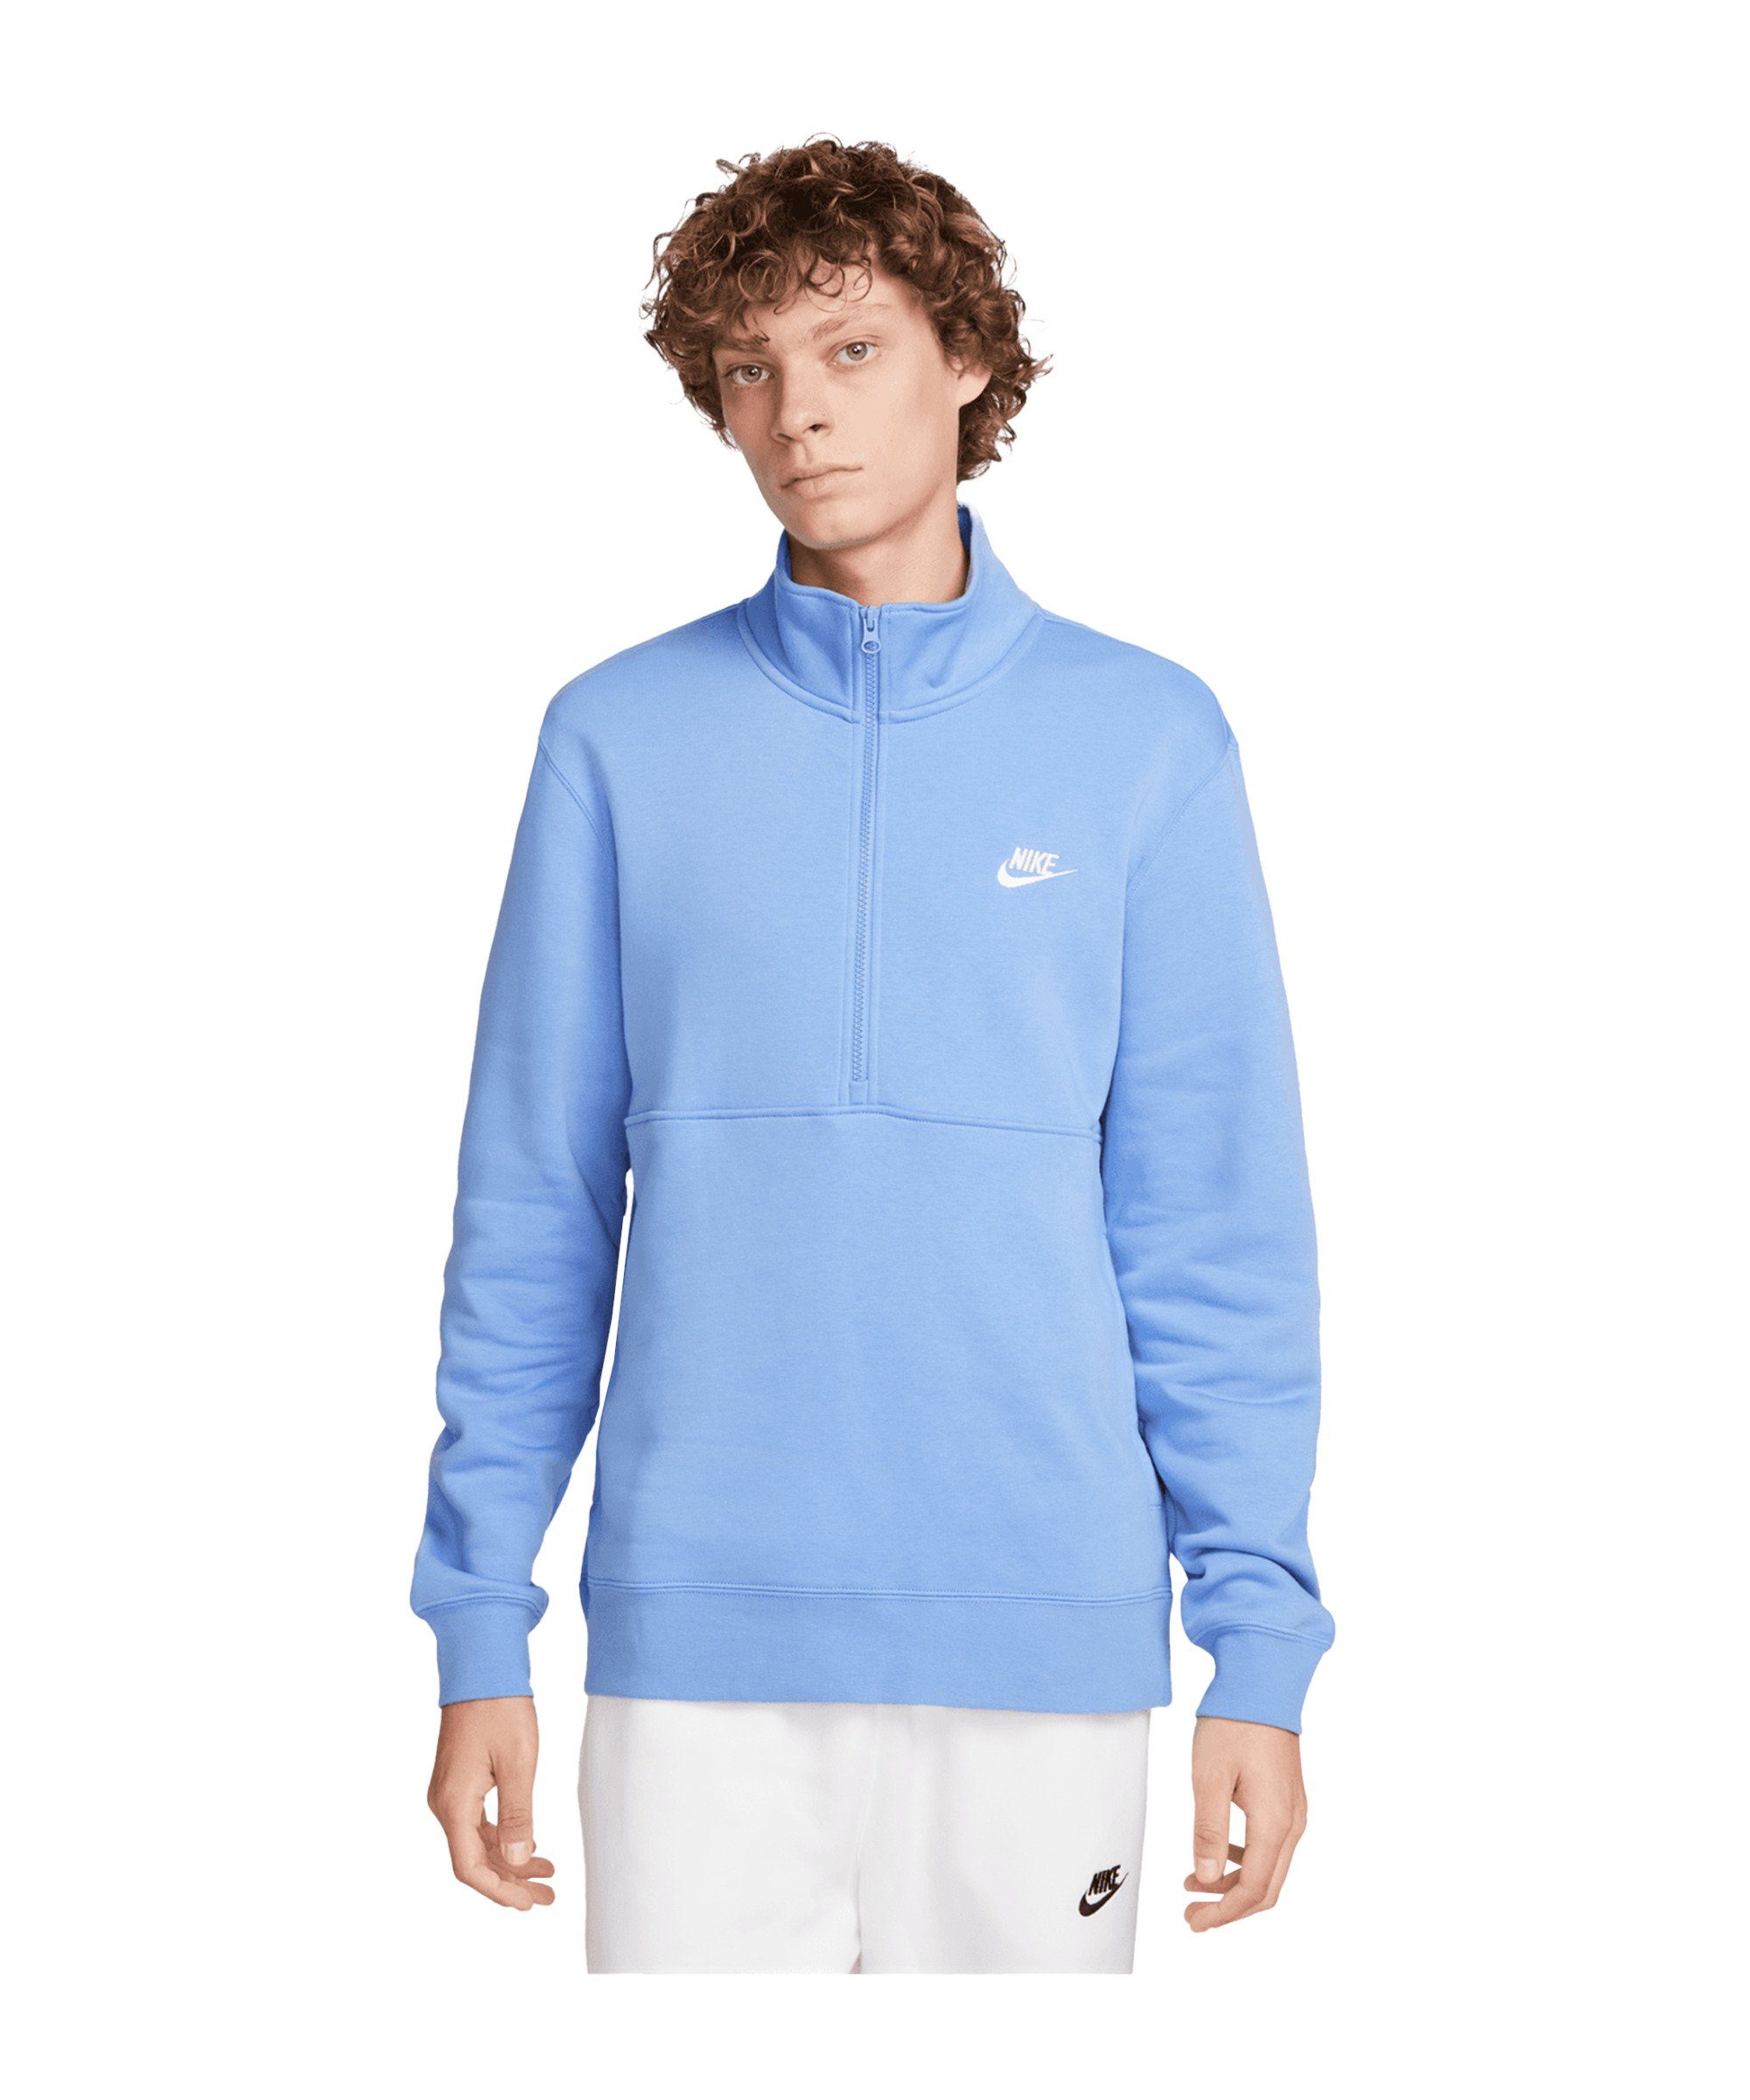 Sweatshirt Sportswear Club Nike Sweatshirt blaublauweiss HalfZip